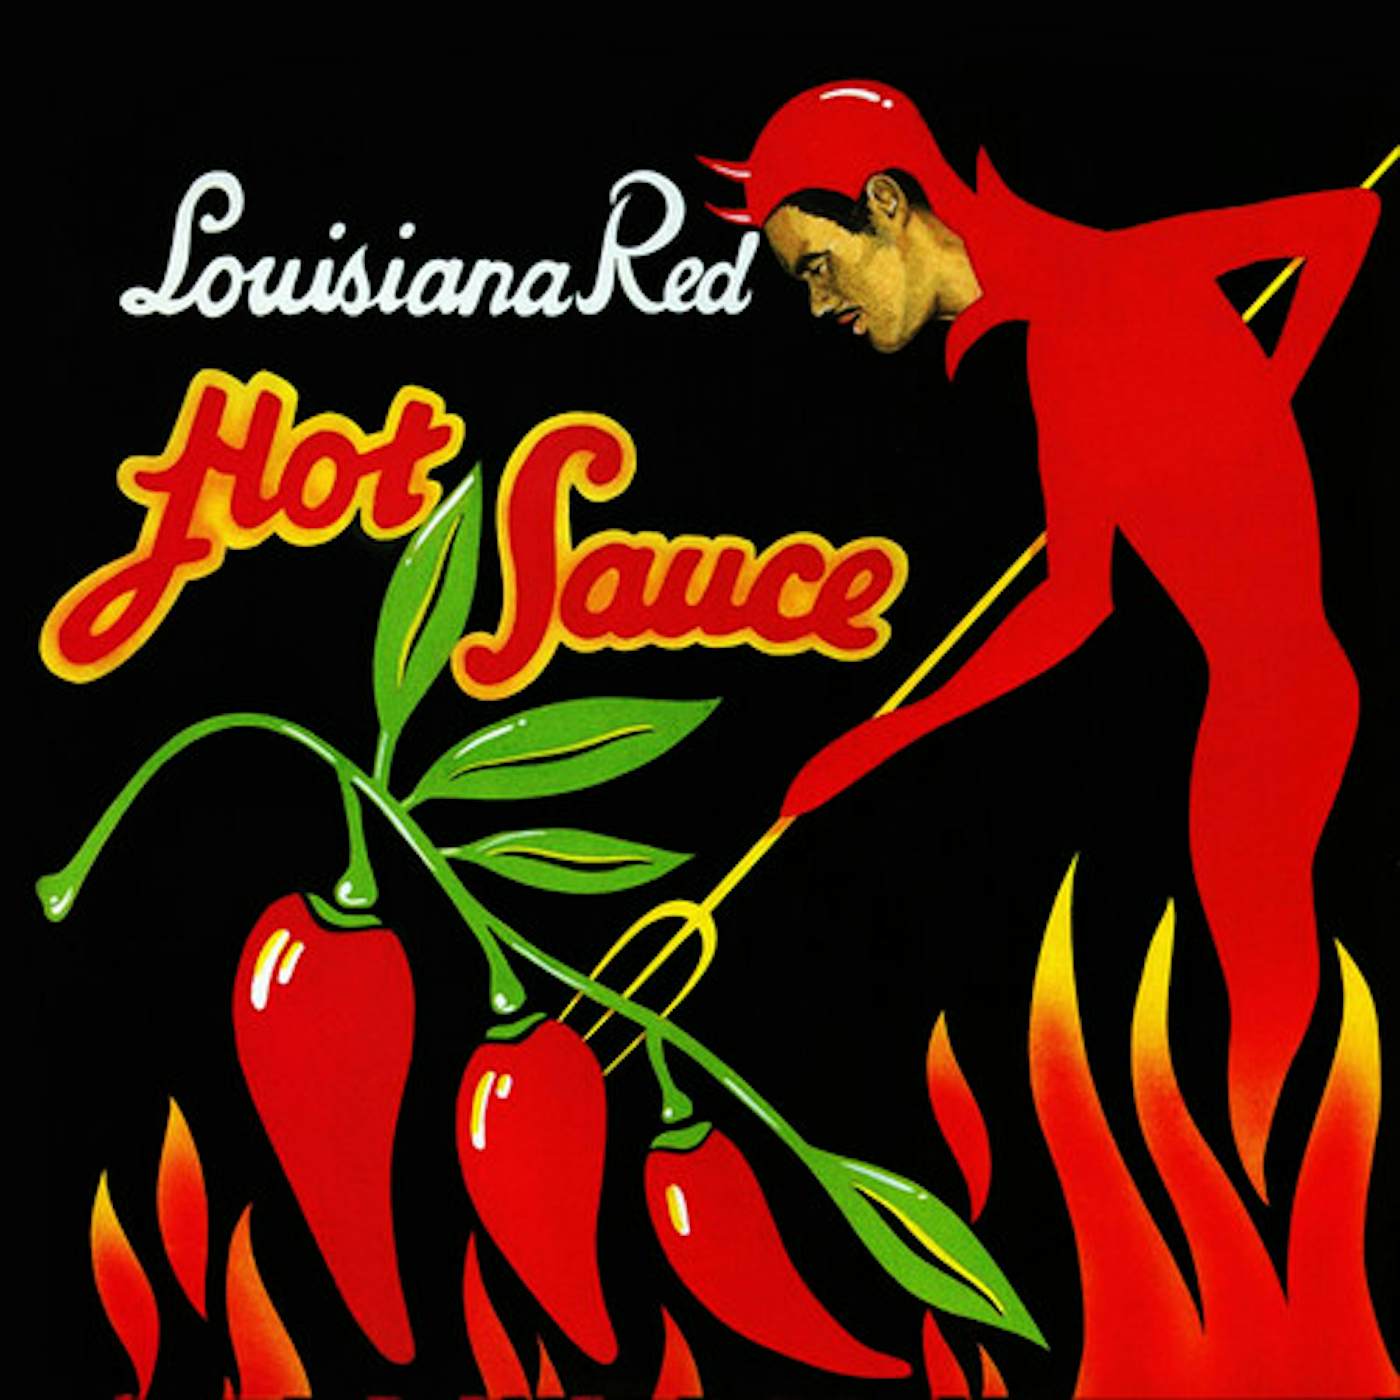 Louisiana Red HOT SAUCE CD